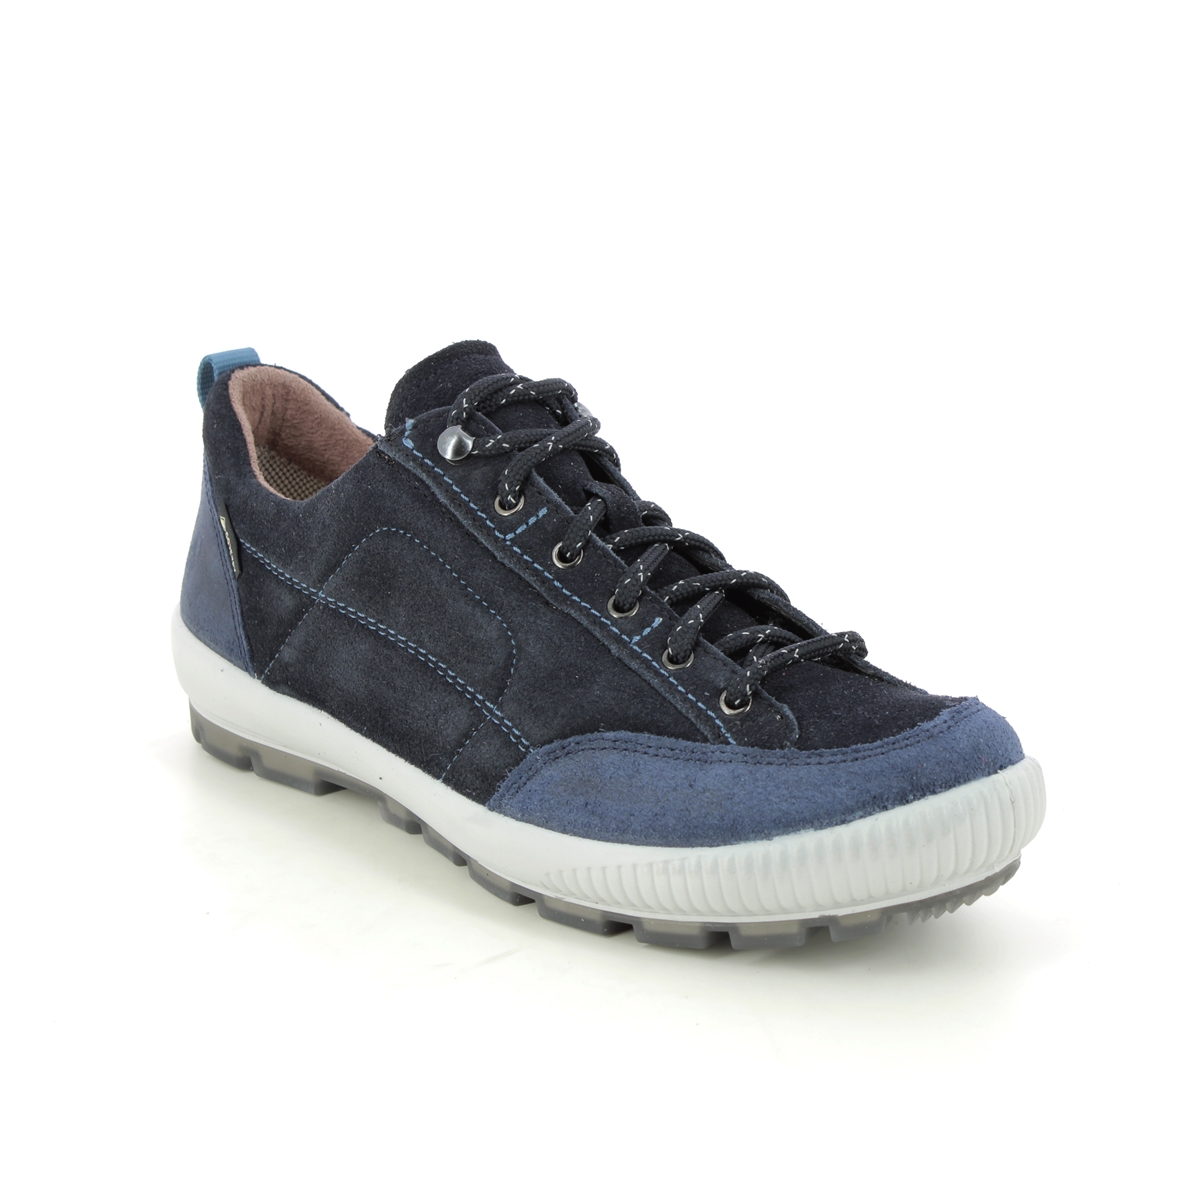 Legero Tanaro Trek Gtx Navy Womens Walking Shoes 2000210-8000 In Size 5.5 In Plain Navy